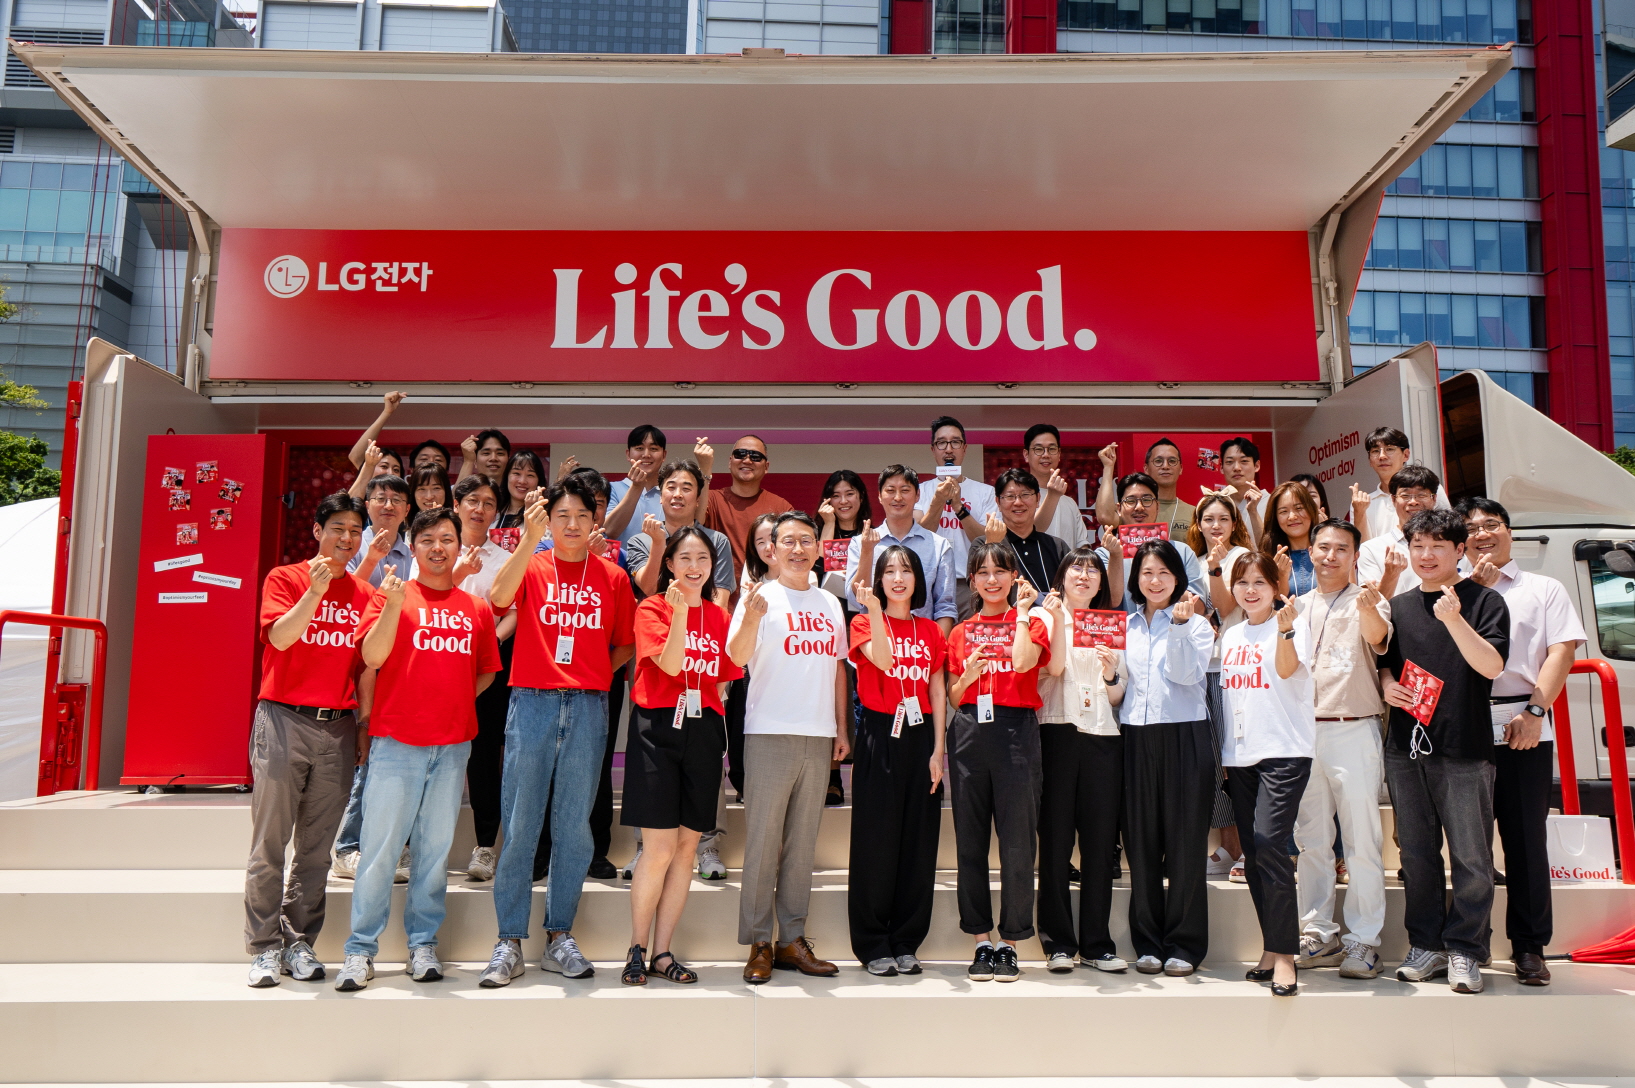 Life's Good 트럭 앞에서 기념사진을 촬영하는 조주완 LG전자 CEO와 임직원들